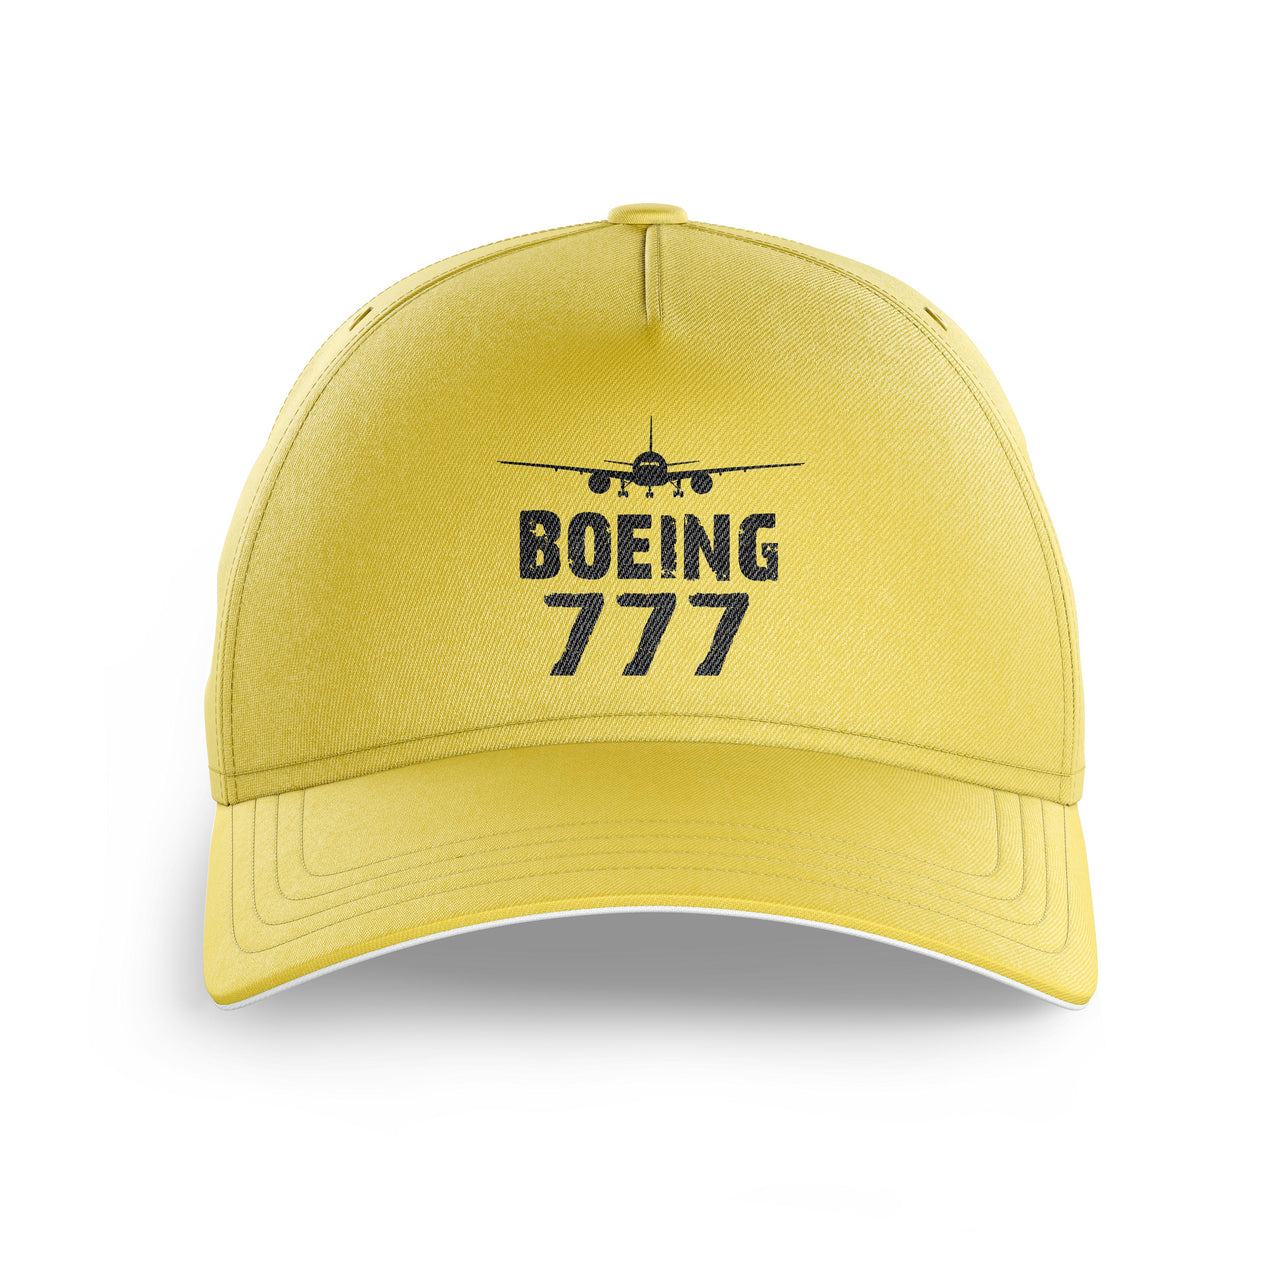 Boeing 777 & Plane Printed Hats